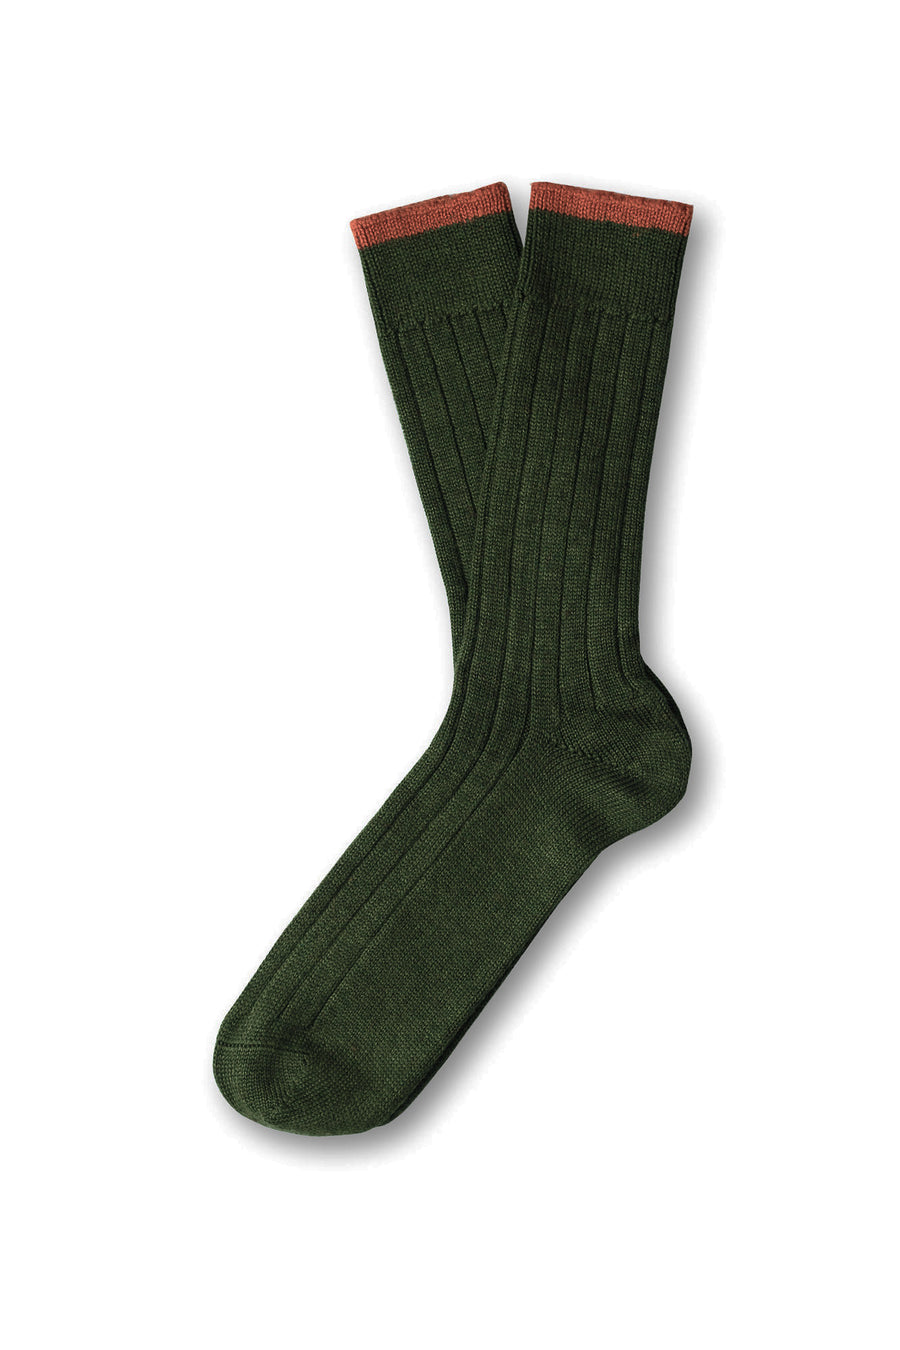 Merino wool green socks